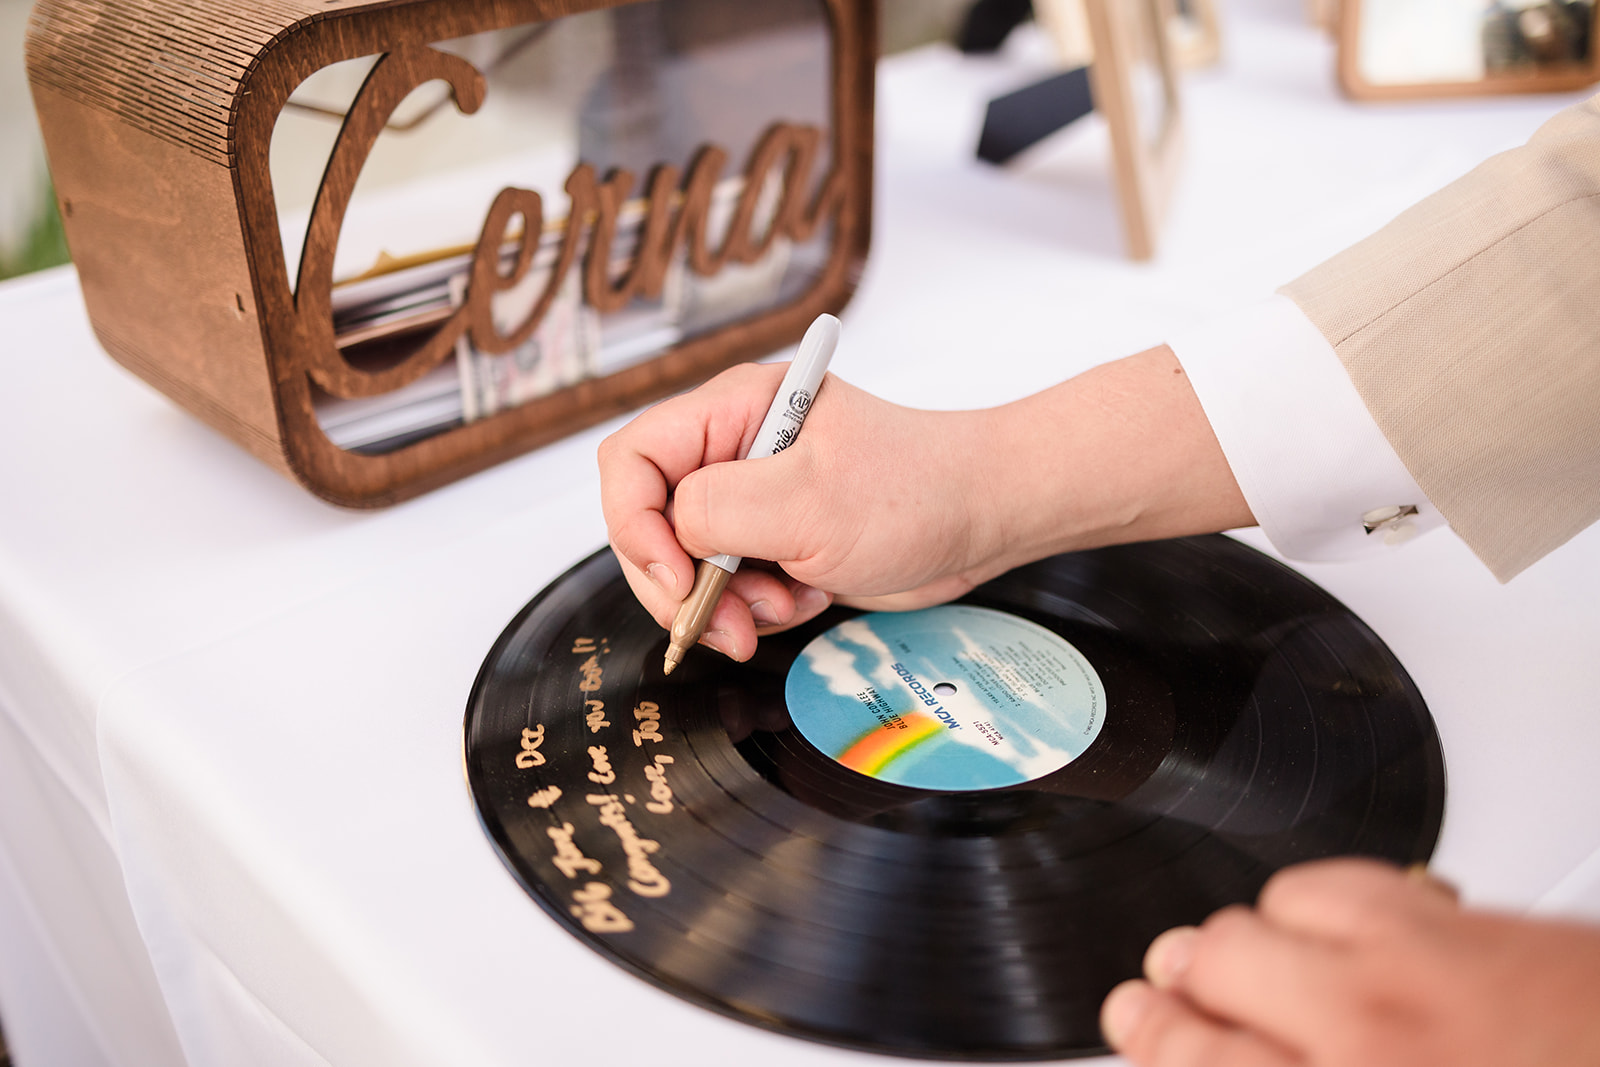 Guests sign vinyl records as a unique wedding guestbook alternative